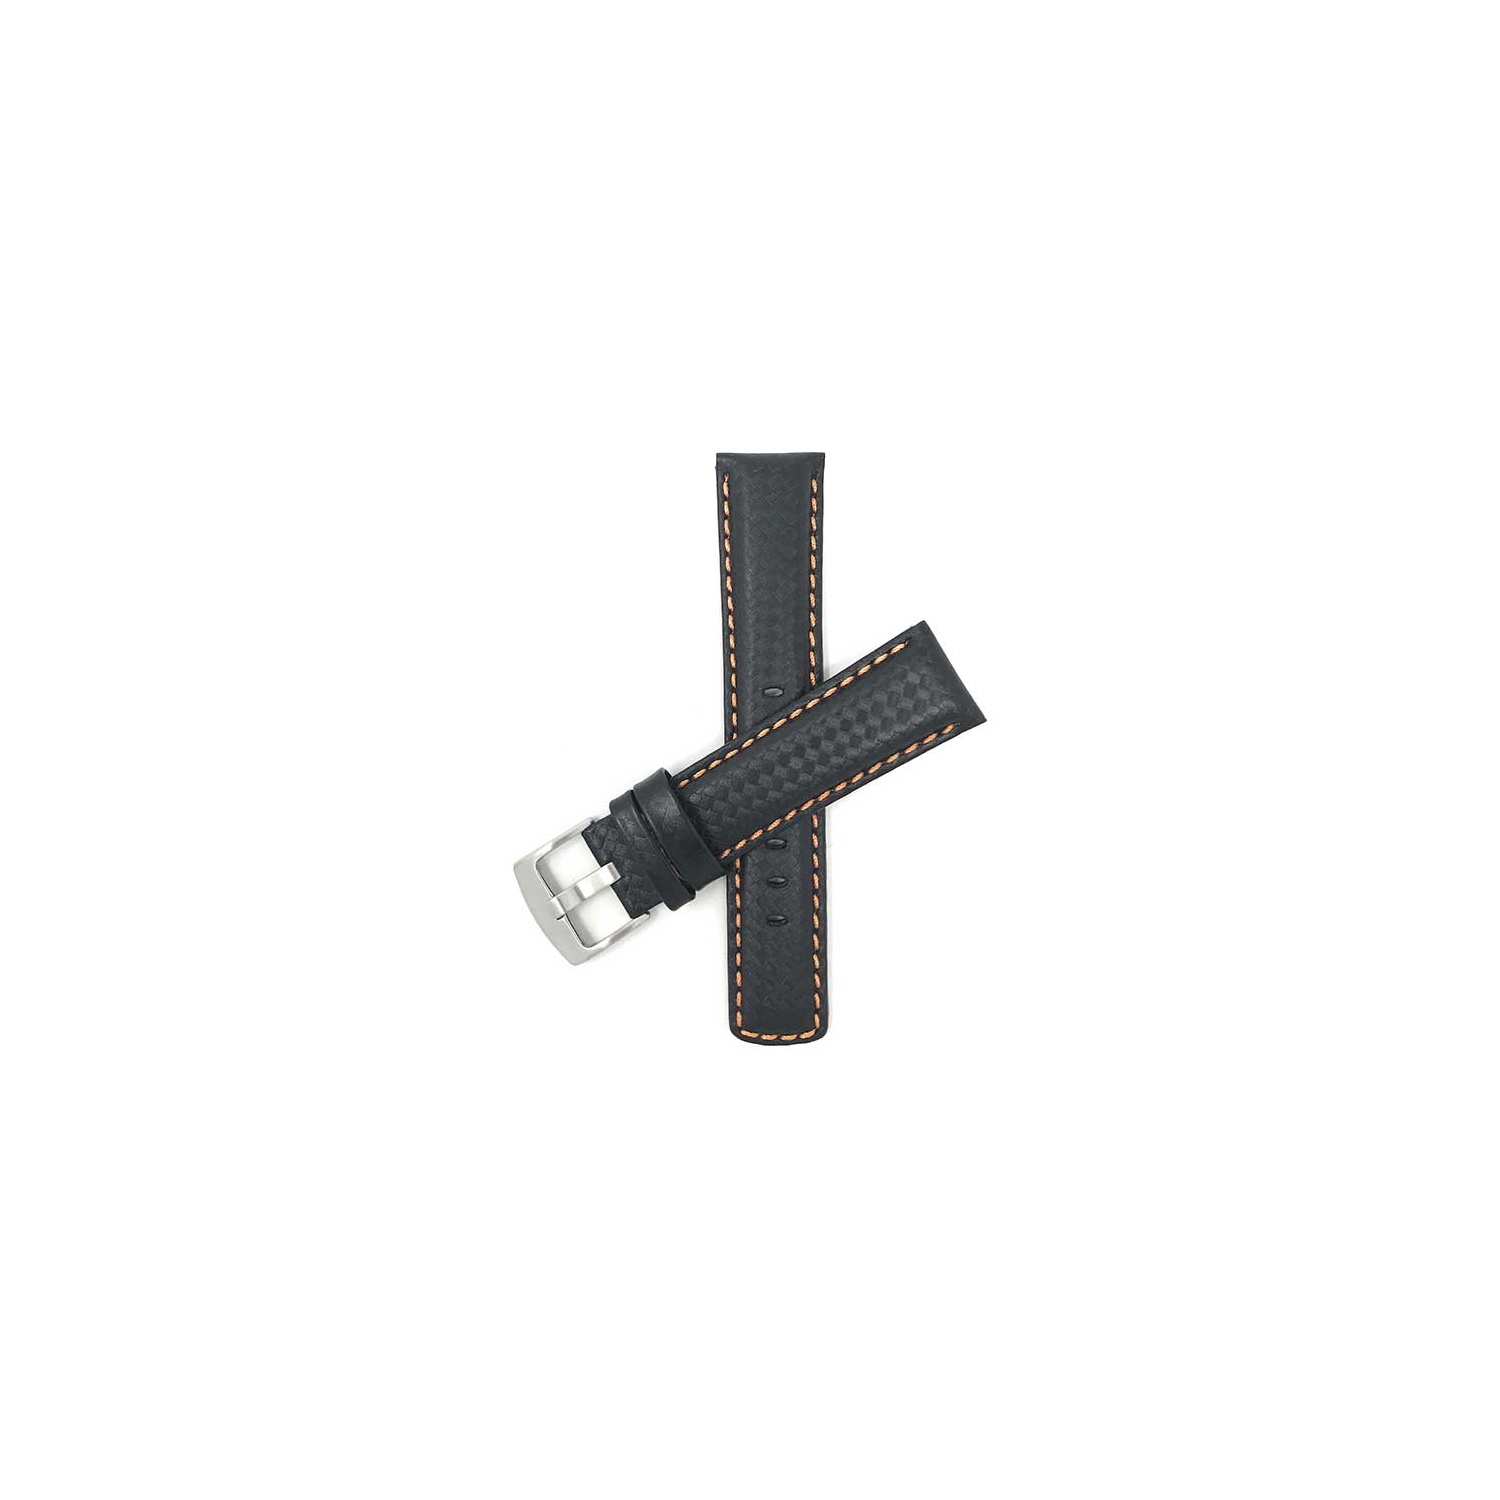 Bandini Mens Leather Carbon Fiber Pattern Smart Watch Band Strap For Michael Kors MKGO - 20mm, Black / Orange / Silver Buckle